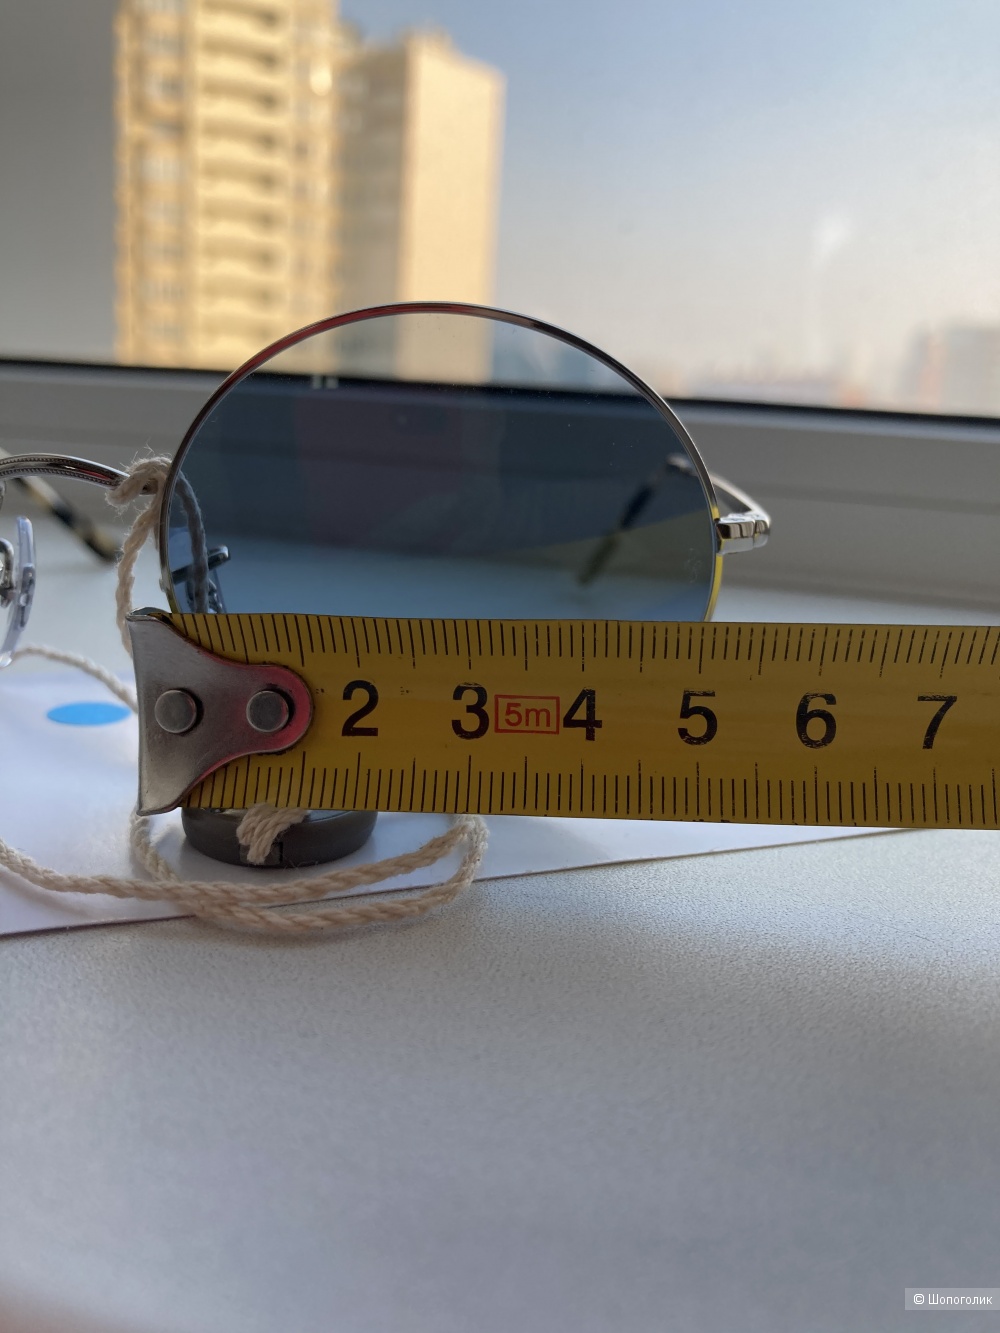 Солнцезащитные очки, RAY-BAN, размер 54 (oval)